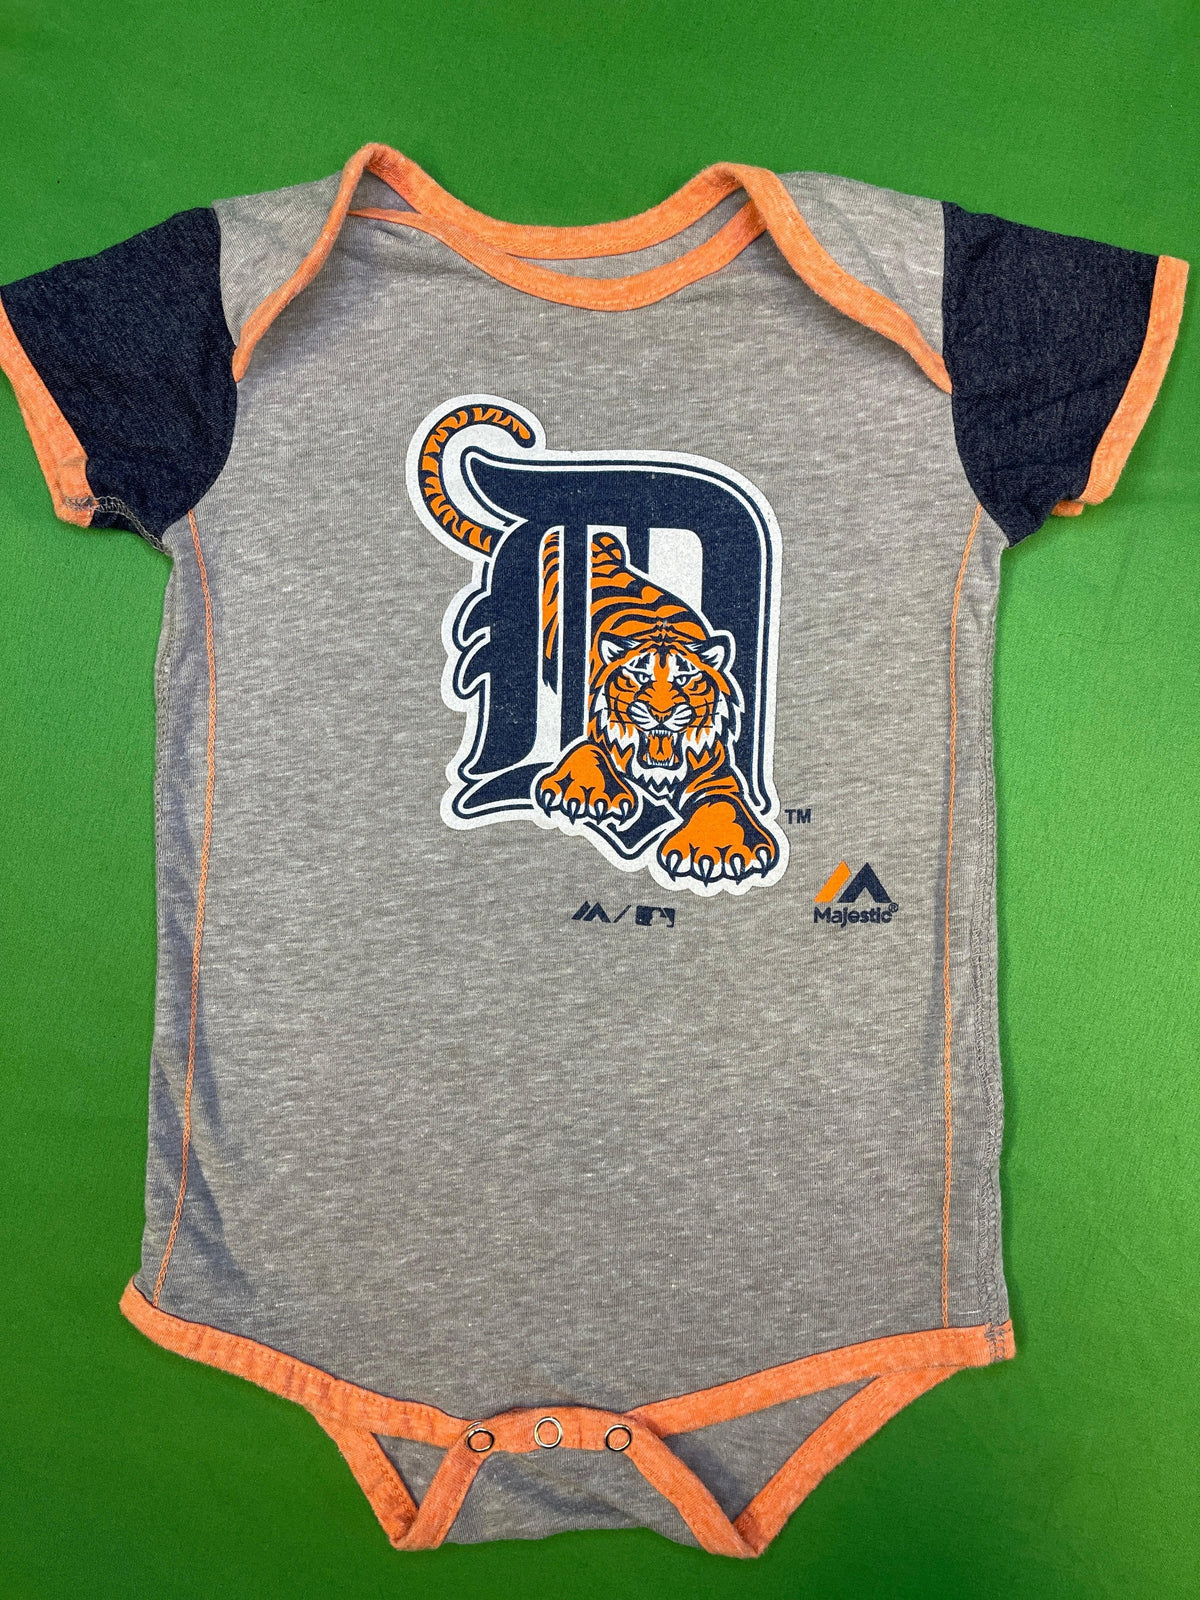 MLB Detroit Tigers Majestic Weathered Baby Infant Bodysuit/Vest Toddler 24 months